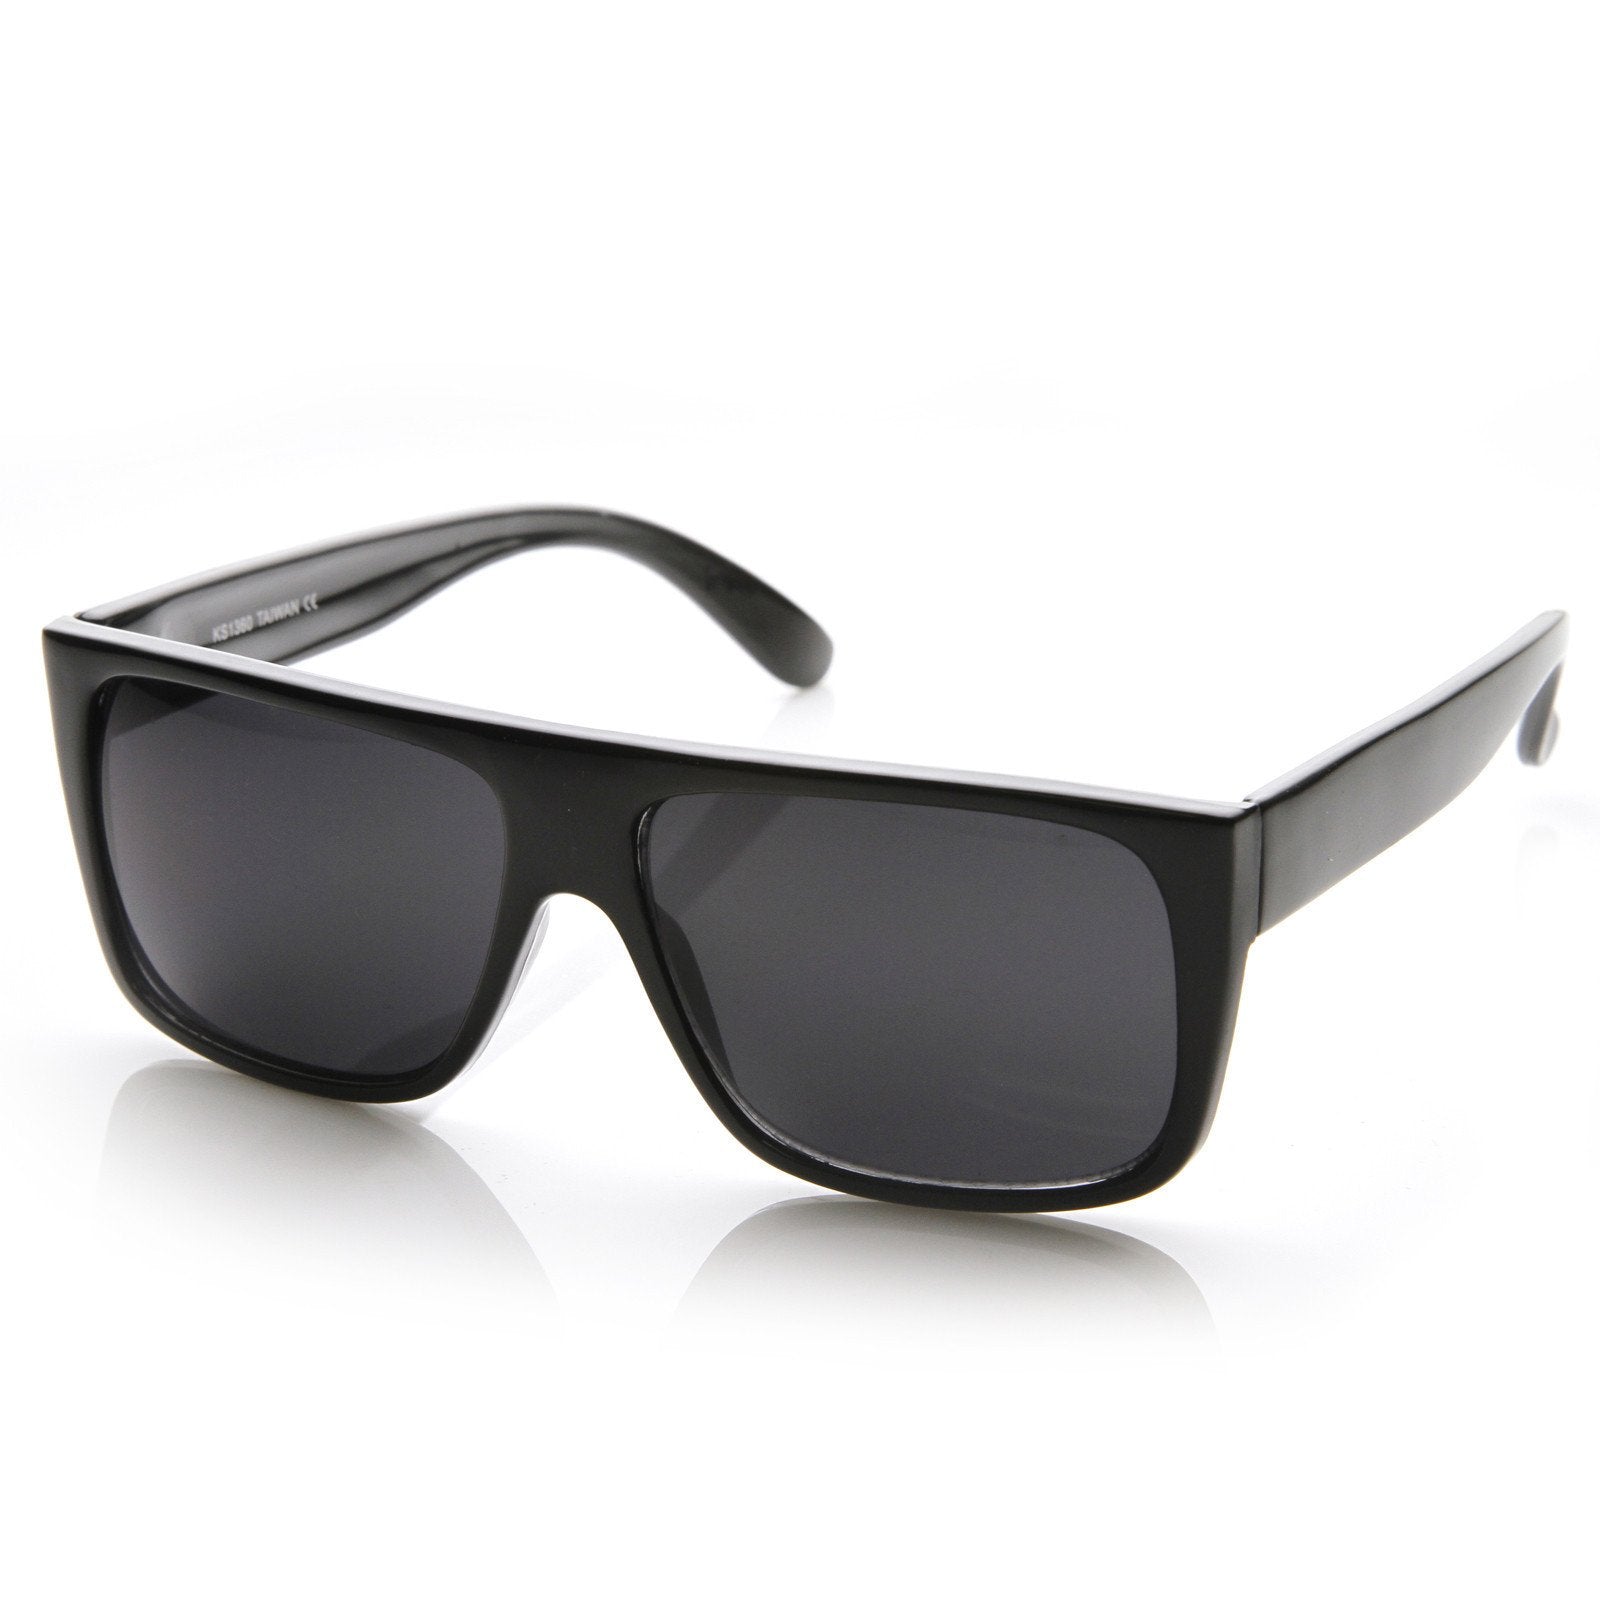 Buy ETHNICSS Retro Square Sunglasses Rectangular Metal frame sunglasses for  Men and Women at Amazon.in